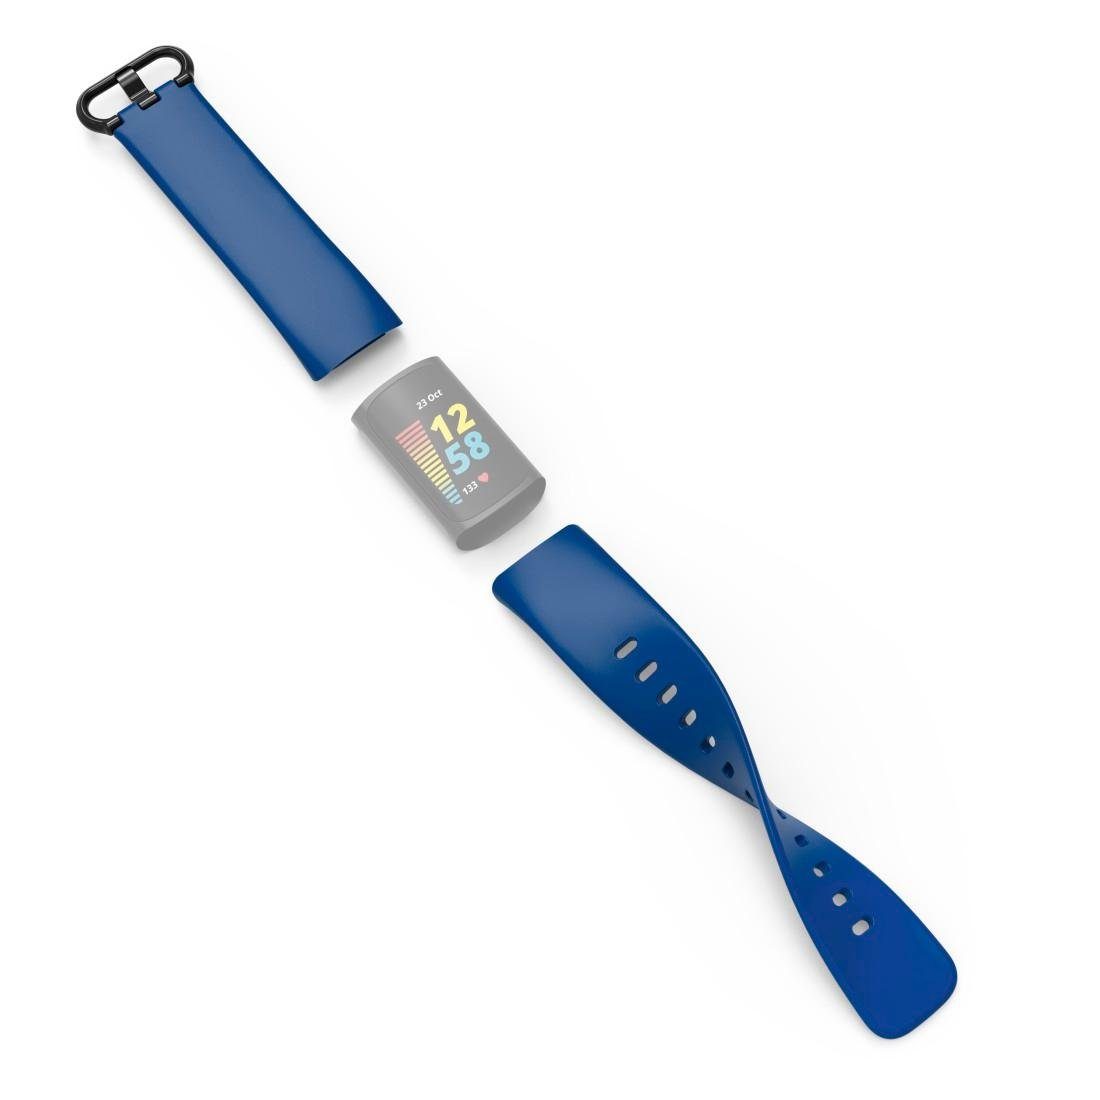 zum Armband 5, universal Charge Hama Uhrenarmband Fitbit dunkelblau für Smartwatch-Armband Tauschen,